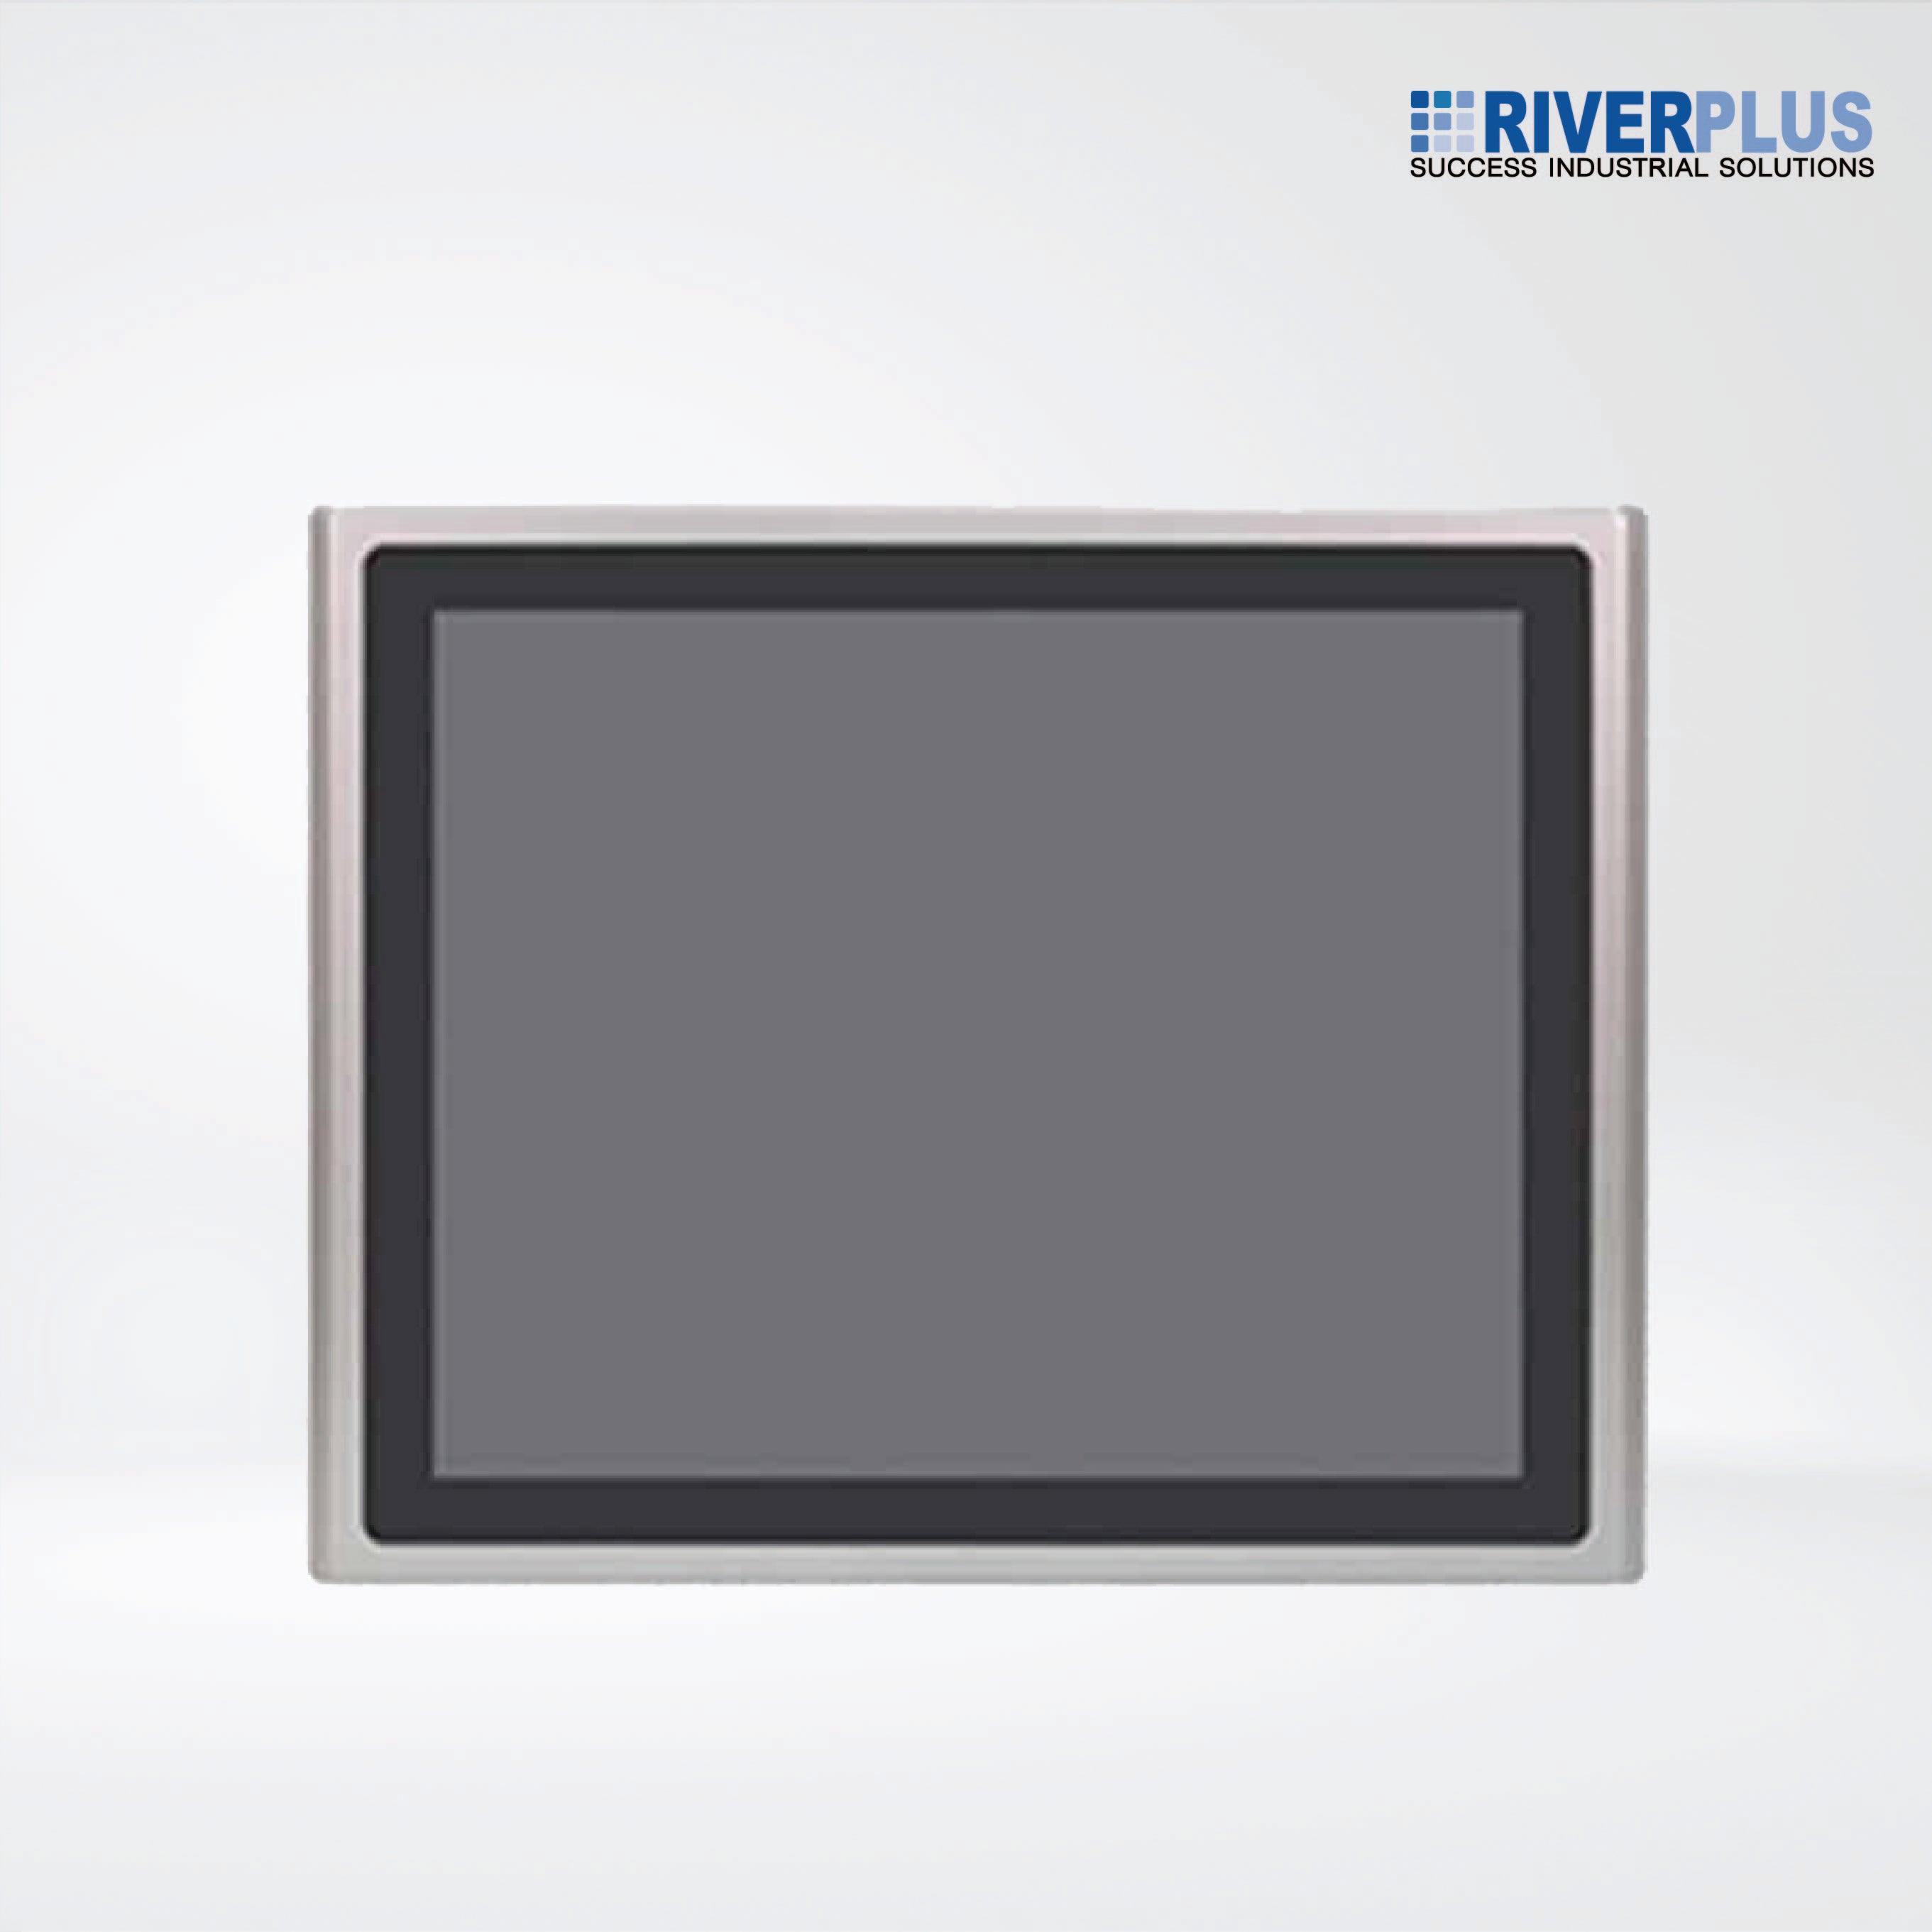 ARCHMI-919AP Intel 6th Gen. Core i3/i5, Fanless Industrial Compact Size Panel PC - Riverplus